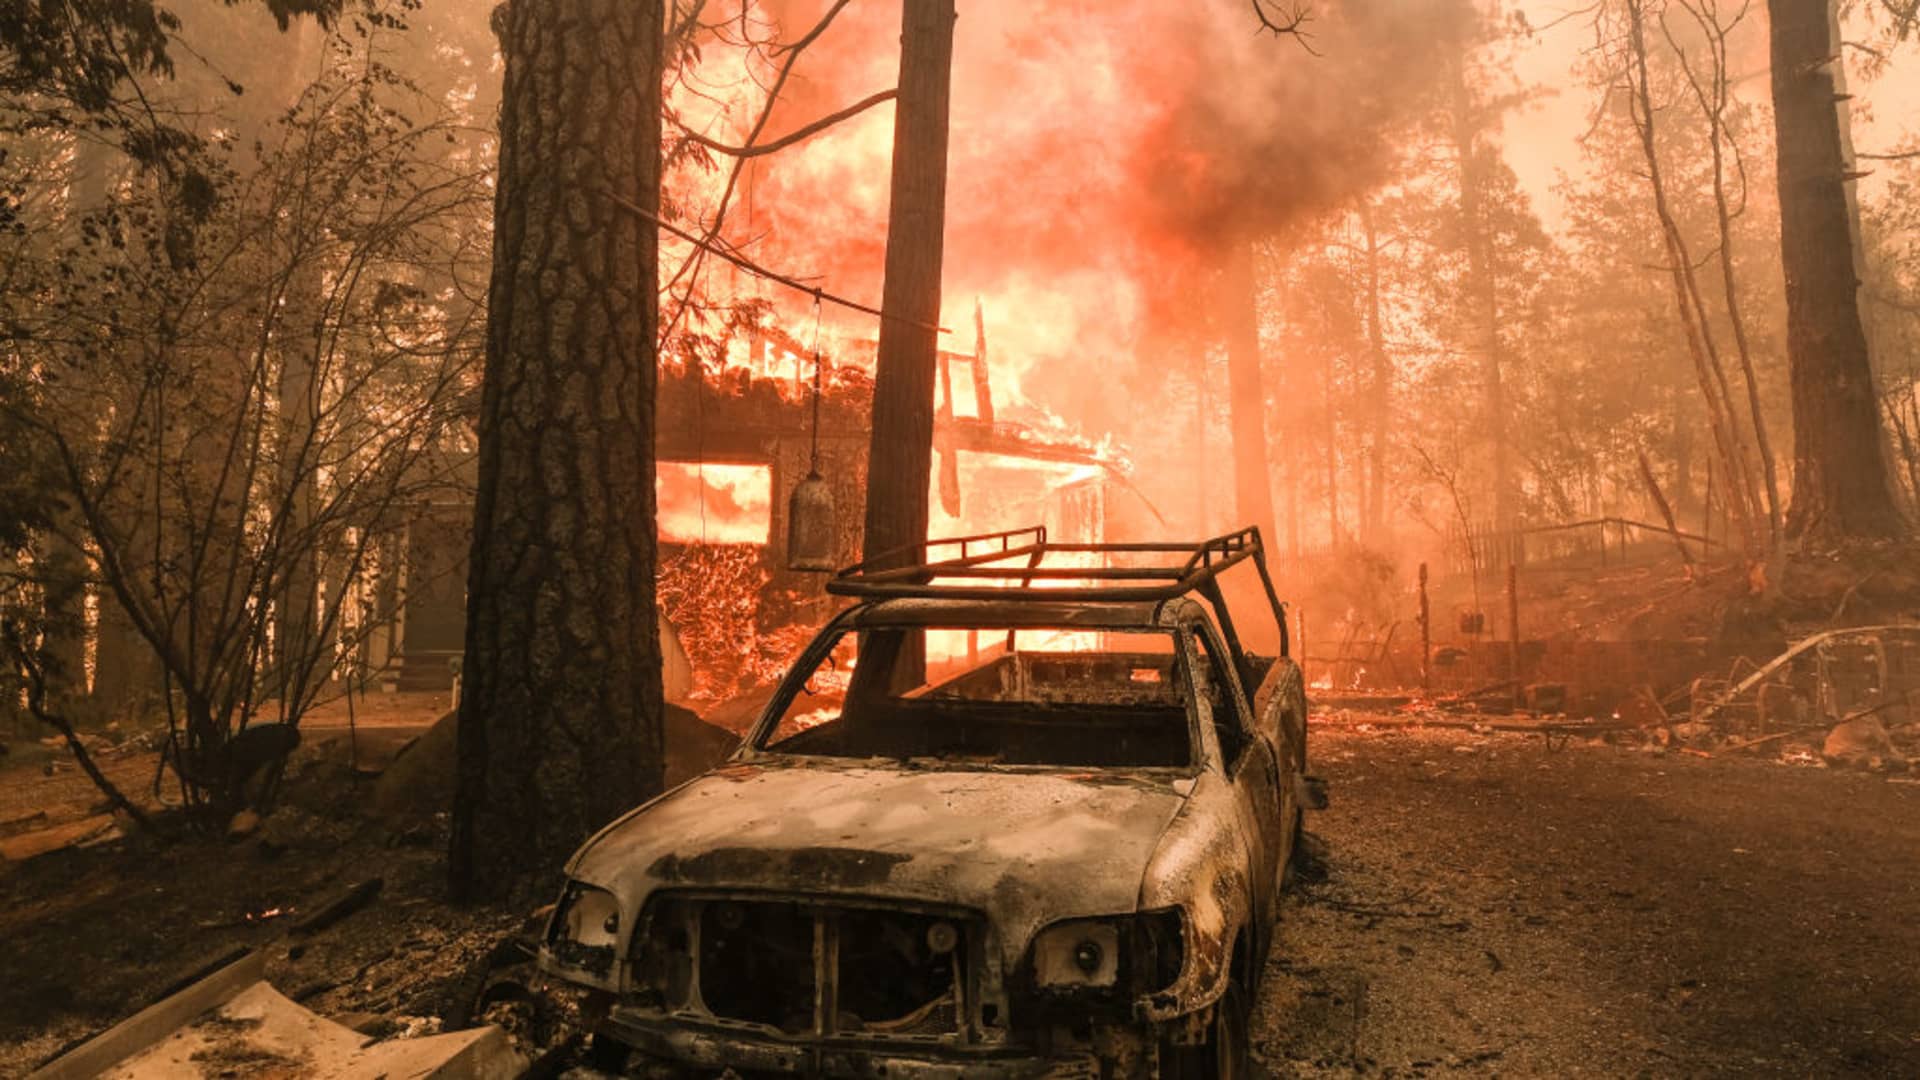 Gov Newsom declared a state of emergency over Oak Fire in California